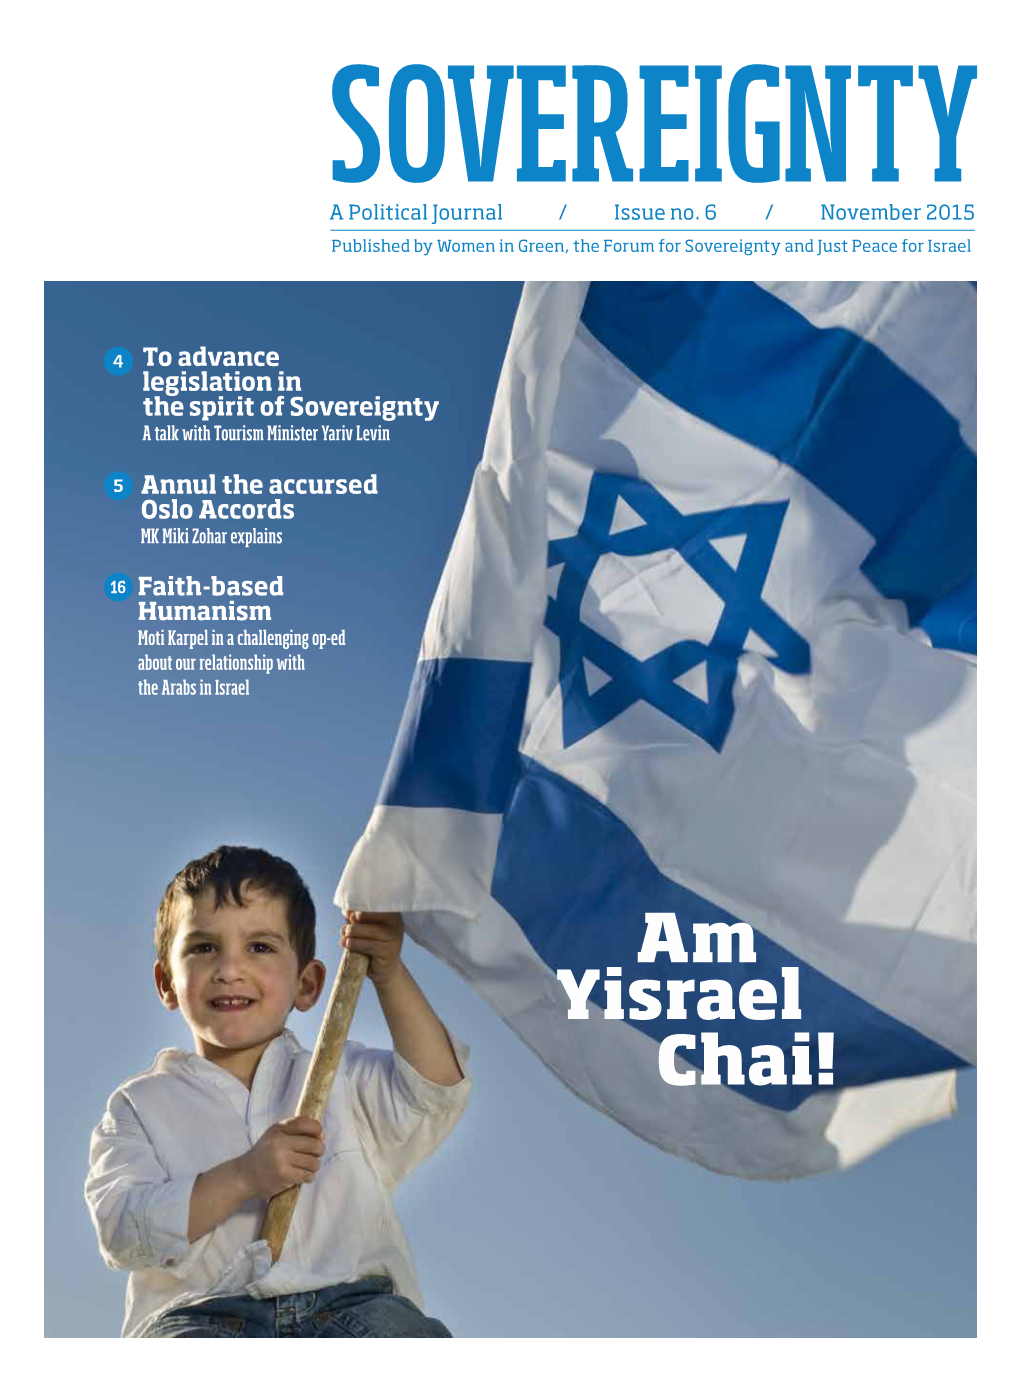 Am Yisrael Chai! 2 / SOVEREIGNTY / Political Journal Political Journal / SOVEREIGNTY / 3